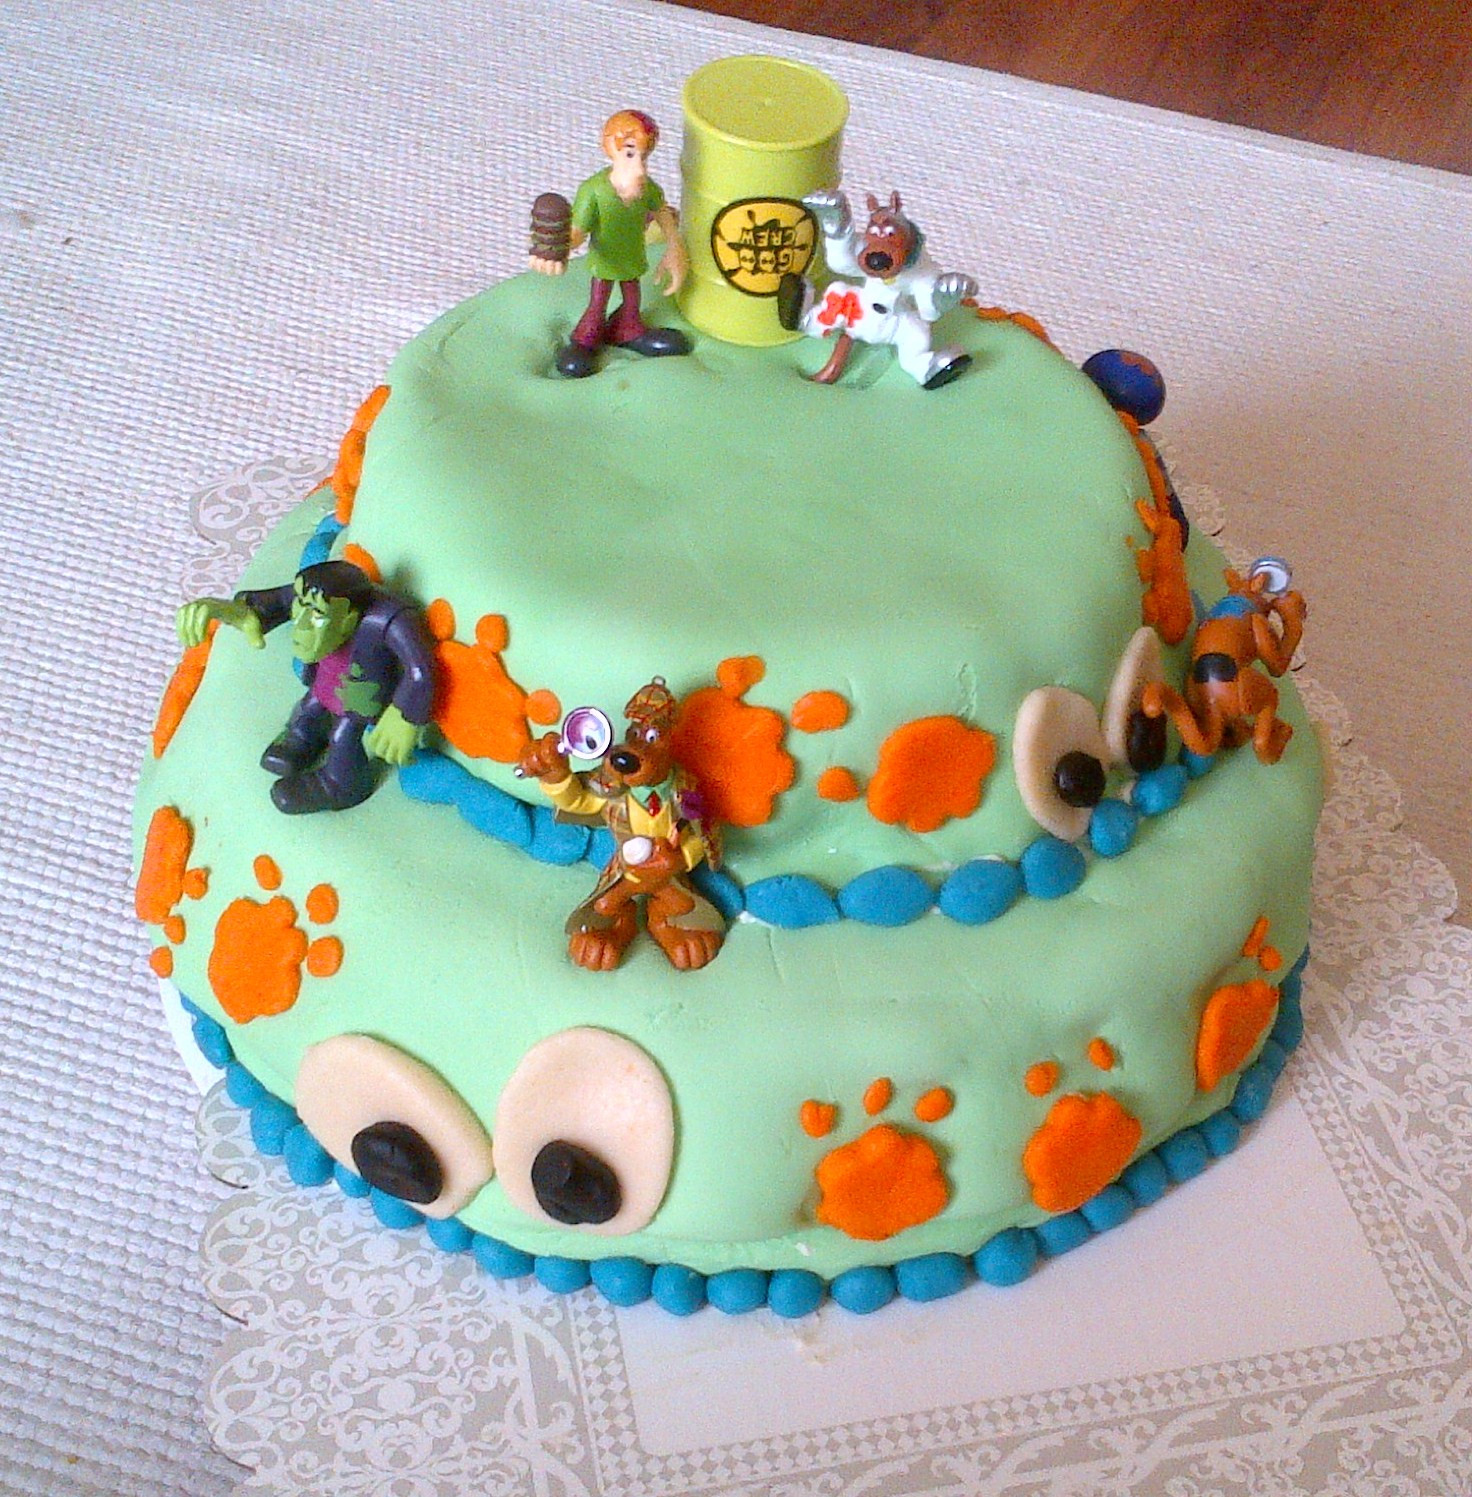 Scooby Doo Birthday Cake
 Yusef s 5th Birthday Scooby Doo Cake